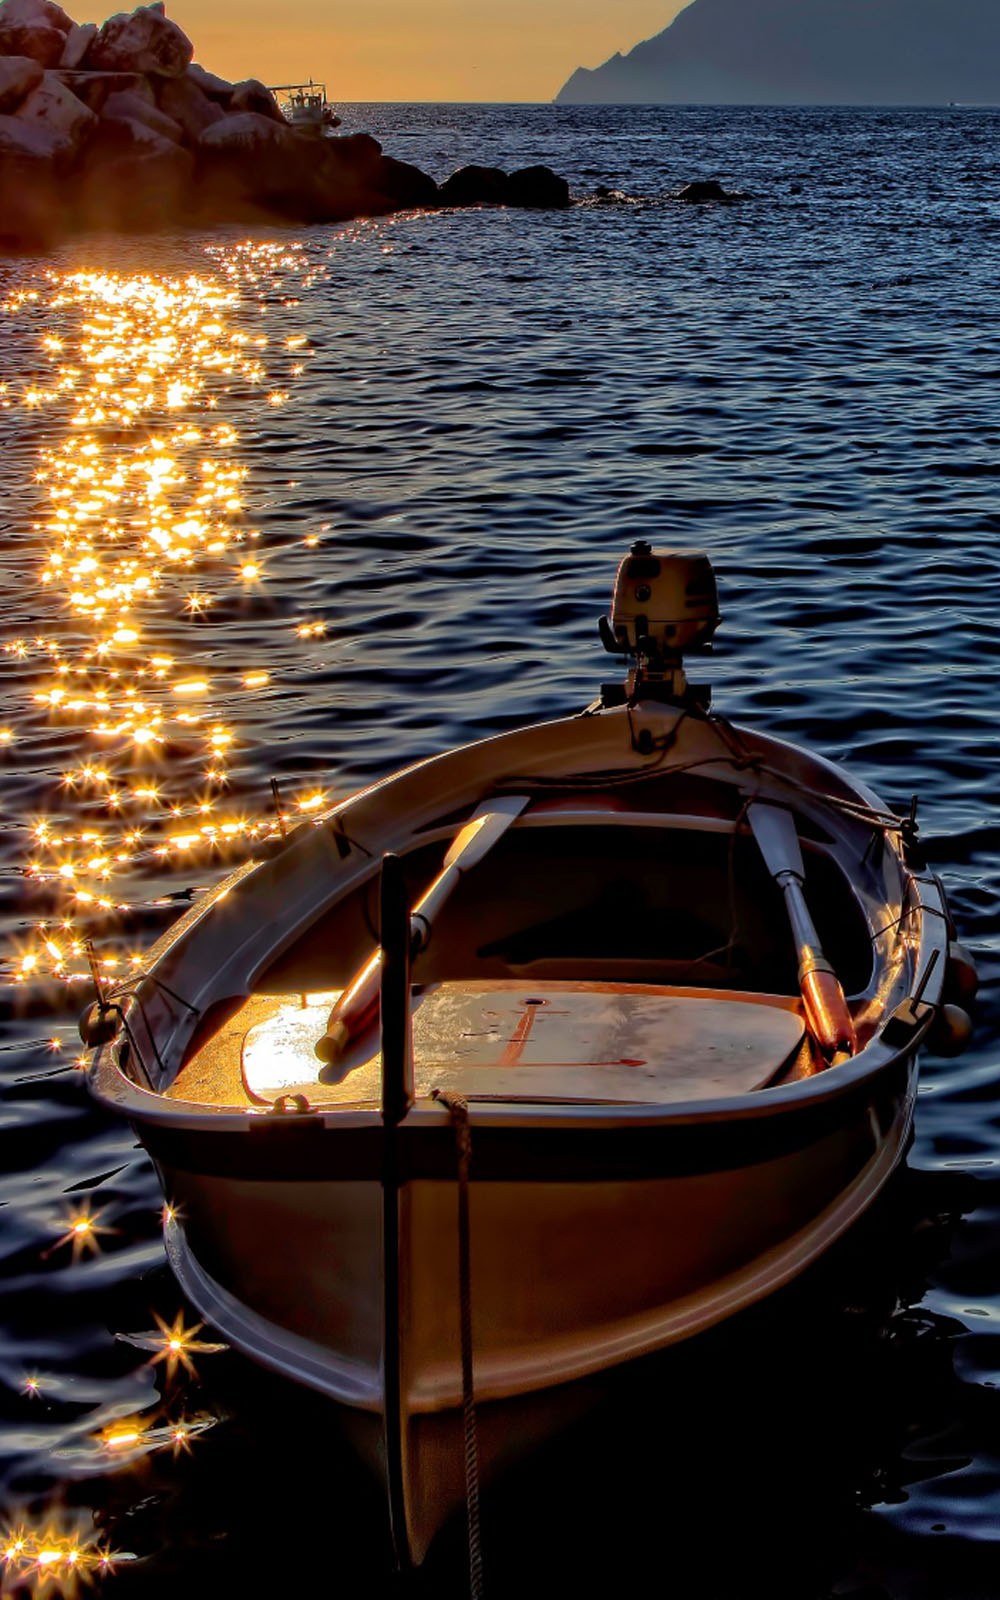 Sunset Boat On Sea 4K Ultra HD Mobile Wallpaper